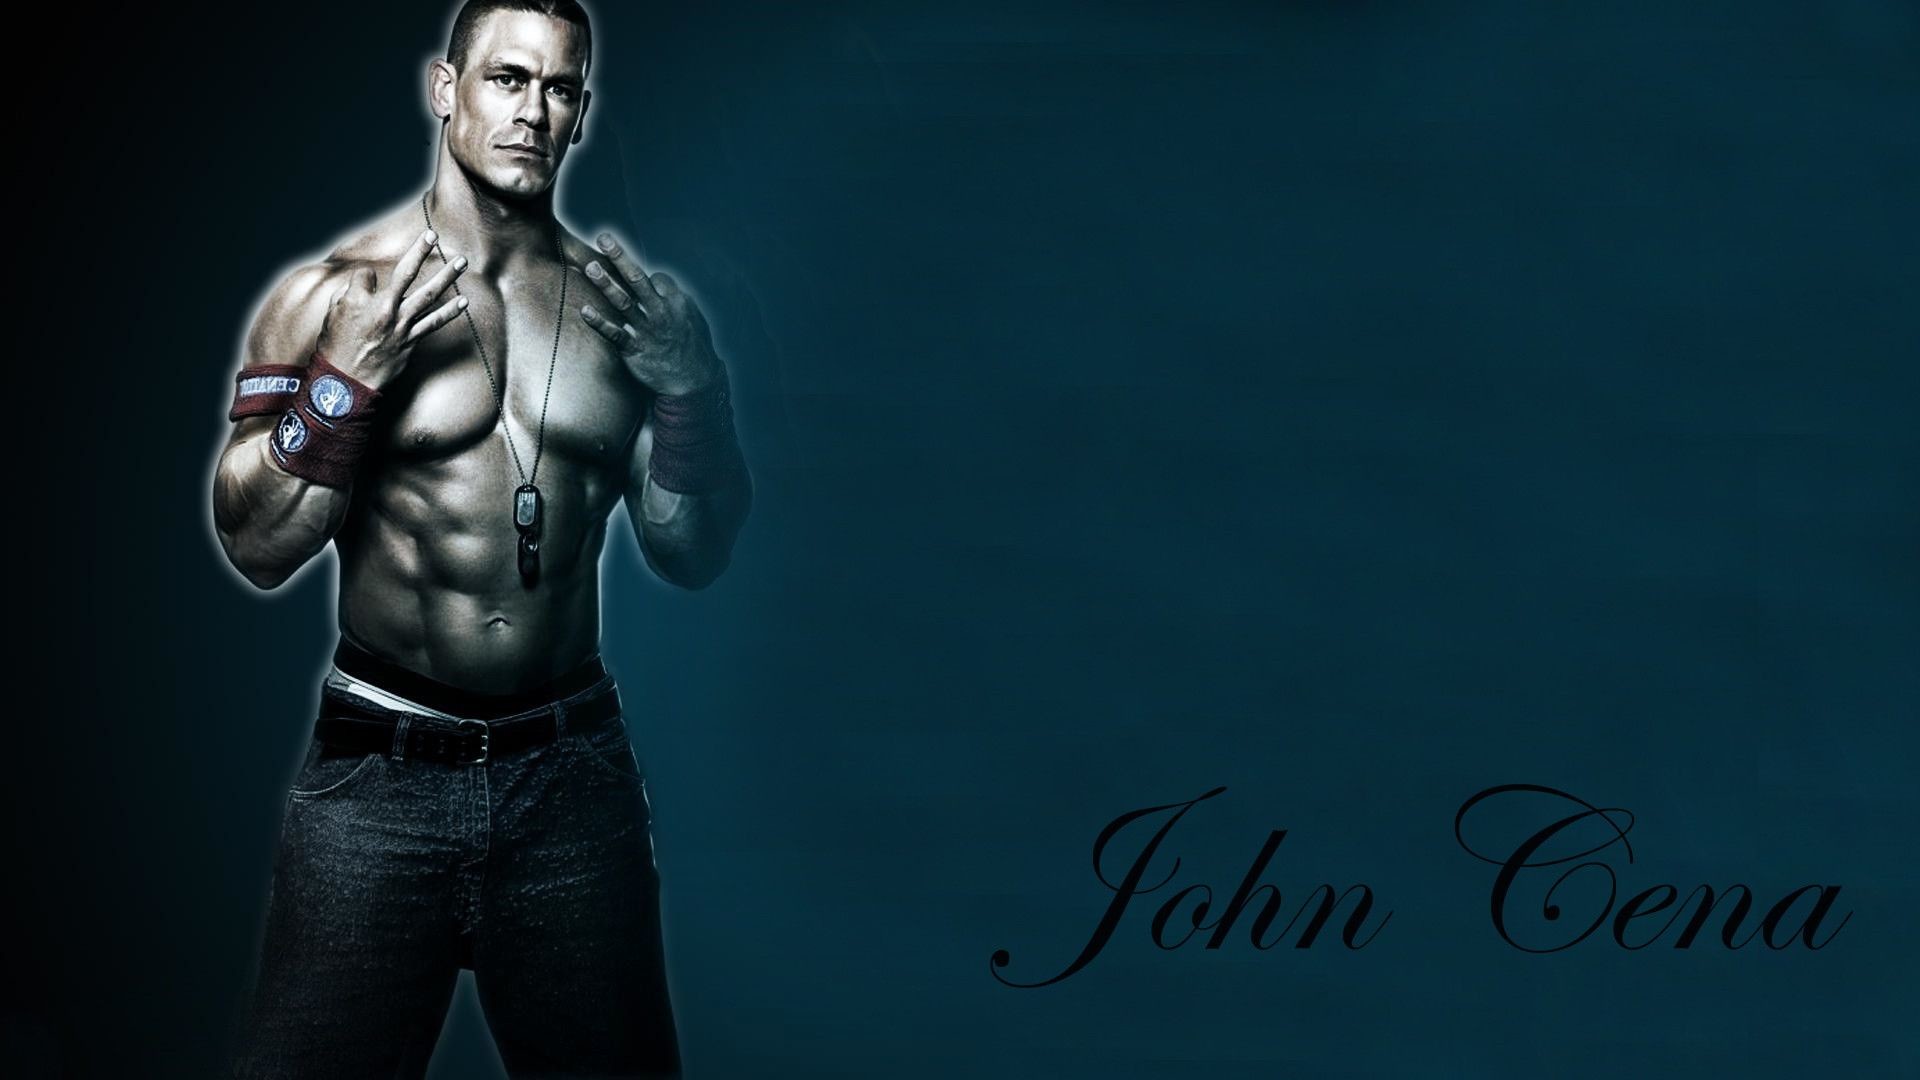 Wwe John Cena Wallpapers Hd Wallpaper 532ã—504 Pics - John Cena Hd  Wallpaper 1080p - 1920x1080 Wallpaper 